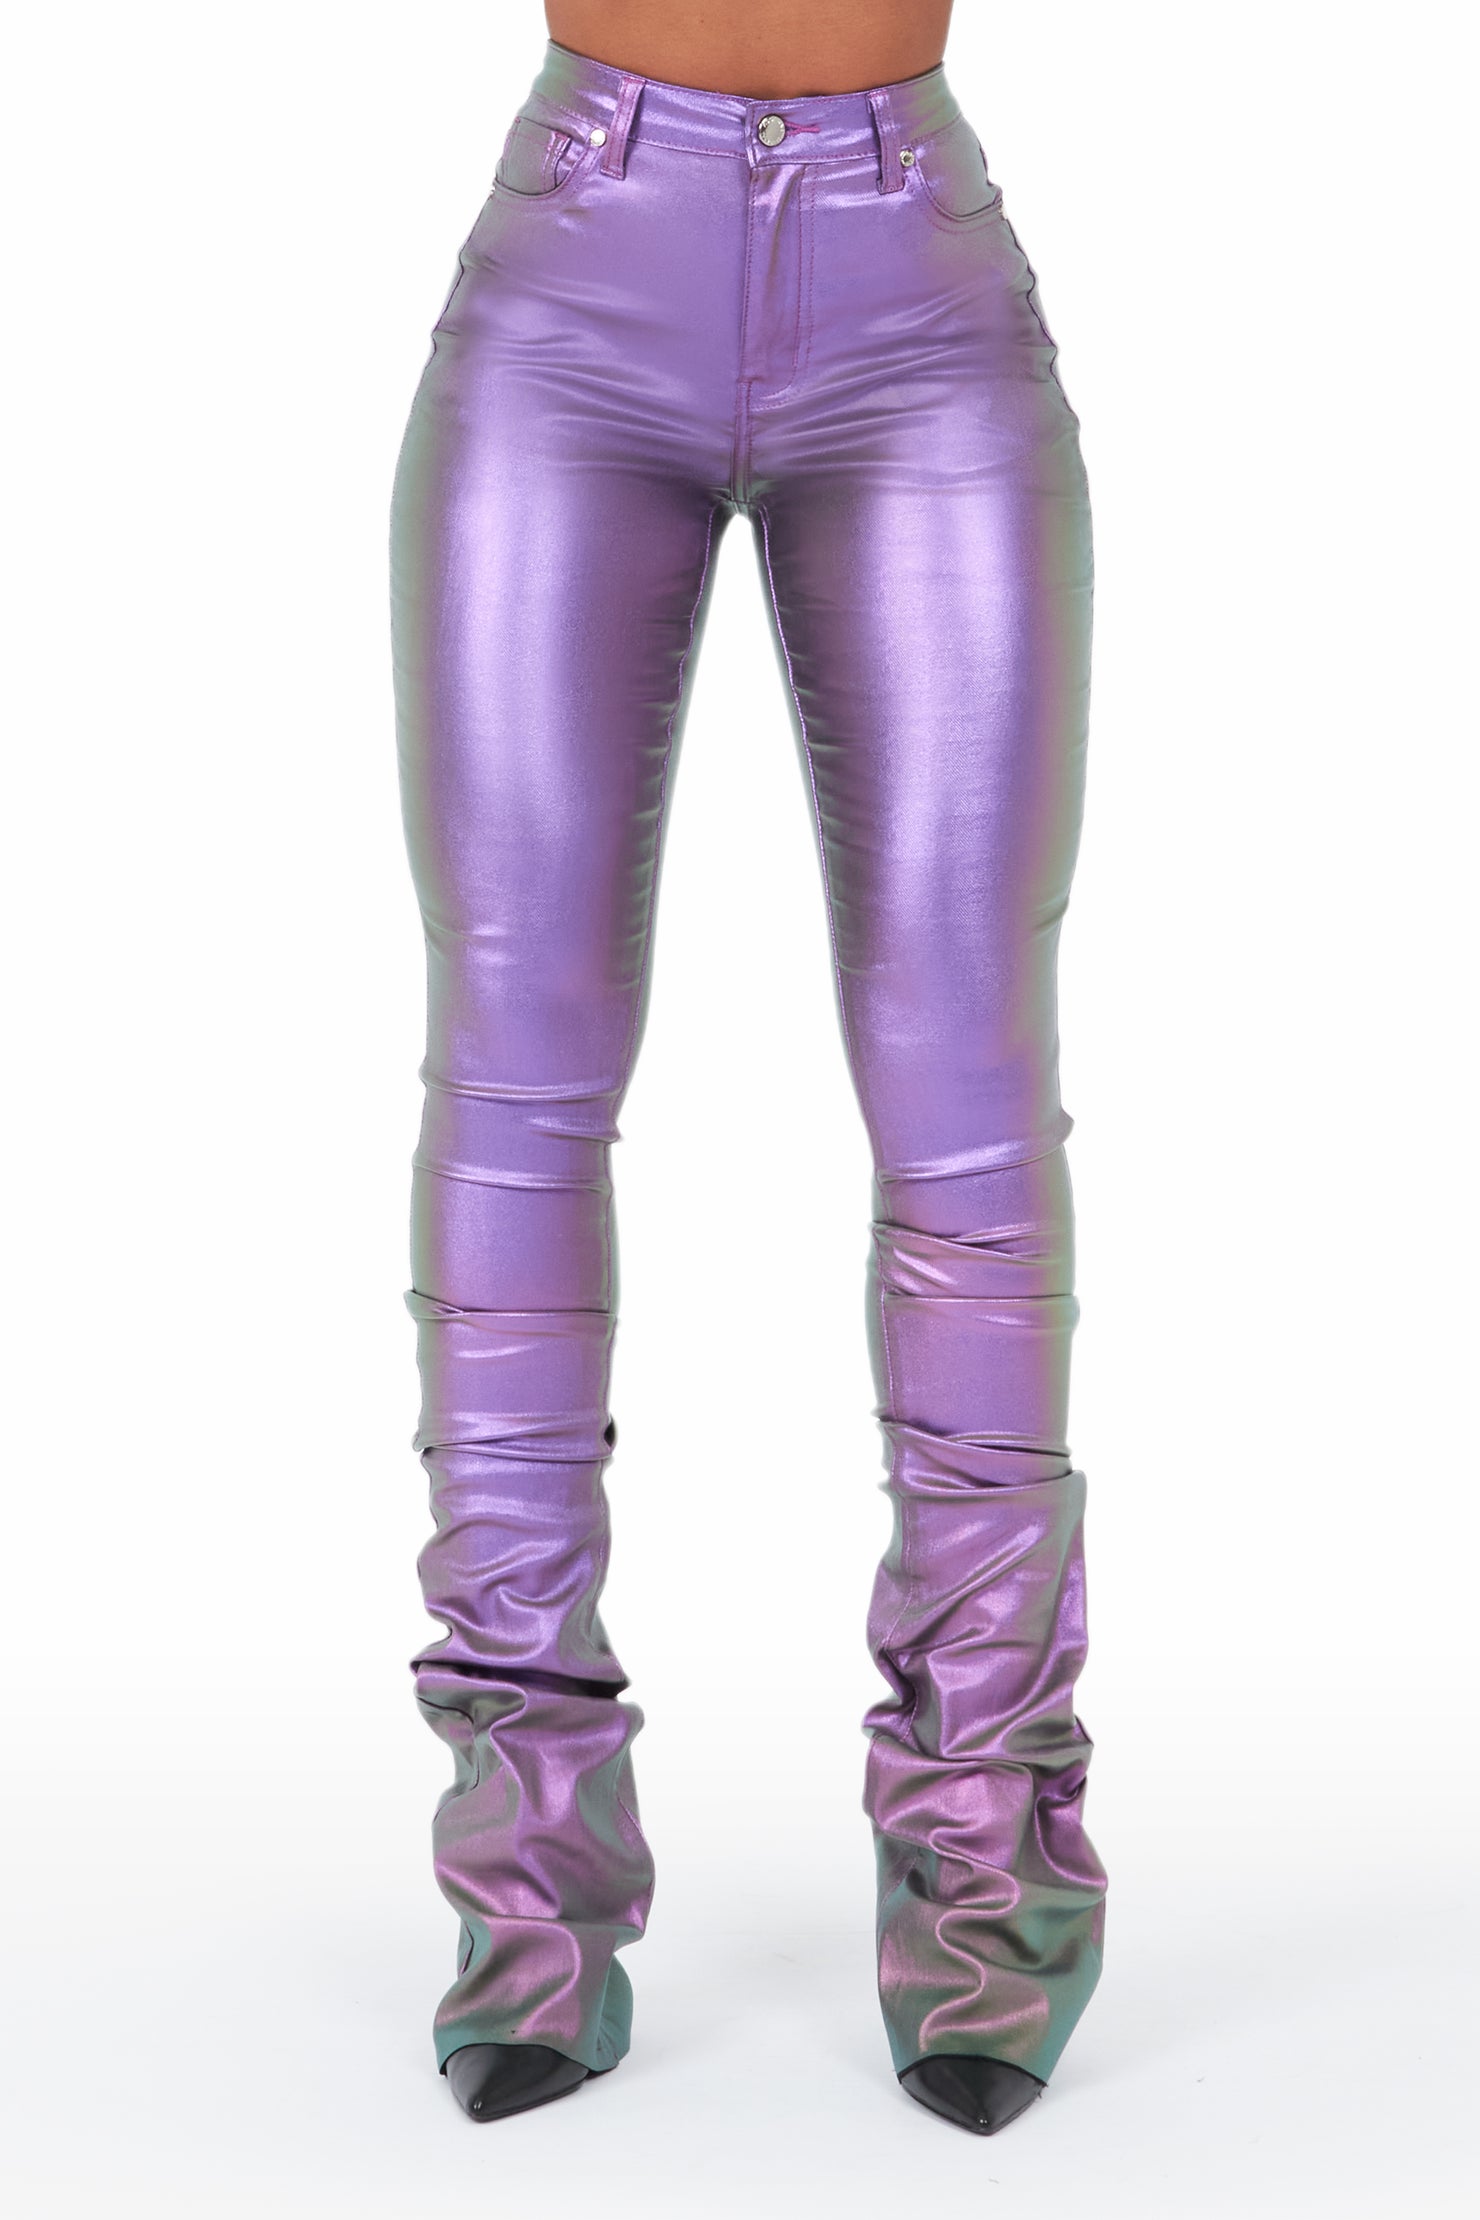 The Drama Metallic Purple PU Super Stacked Pant– Rockstar Original